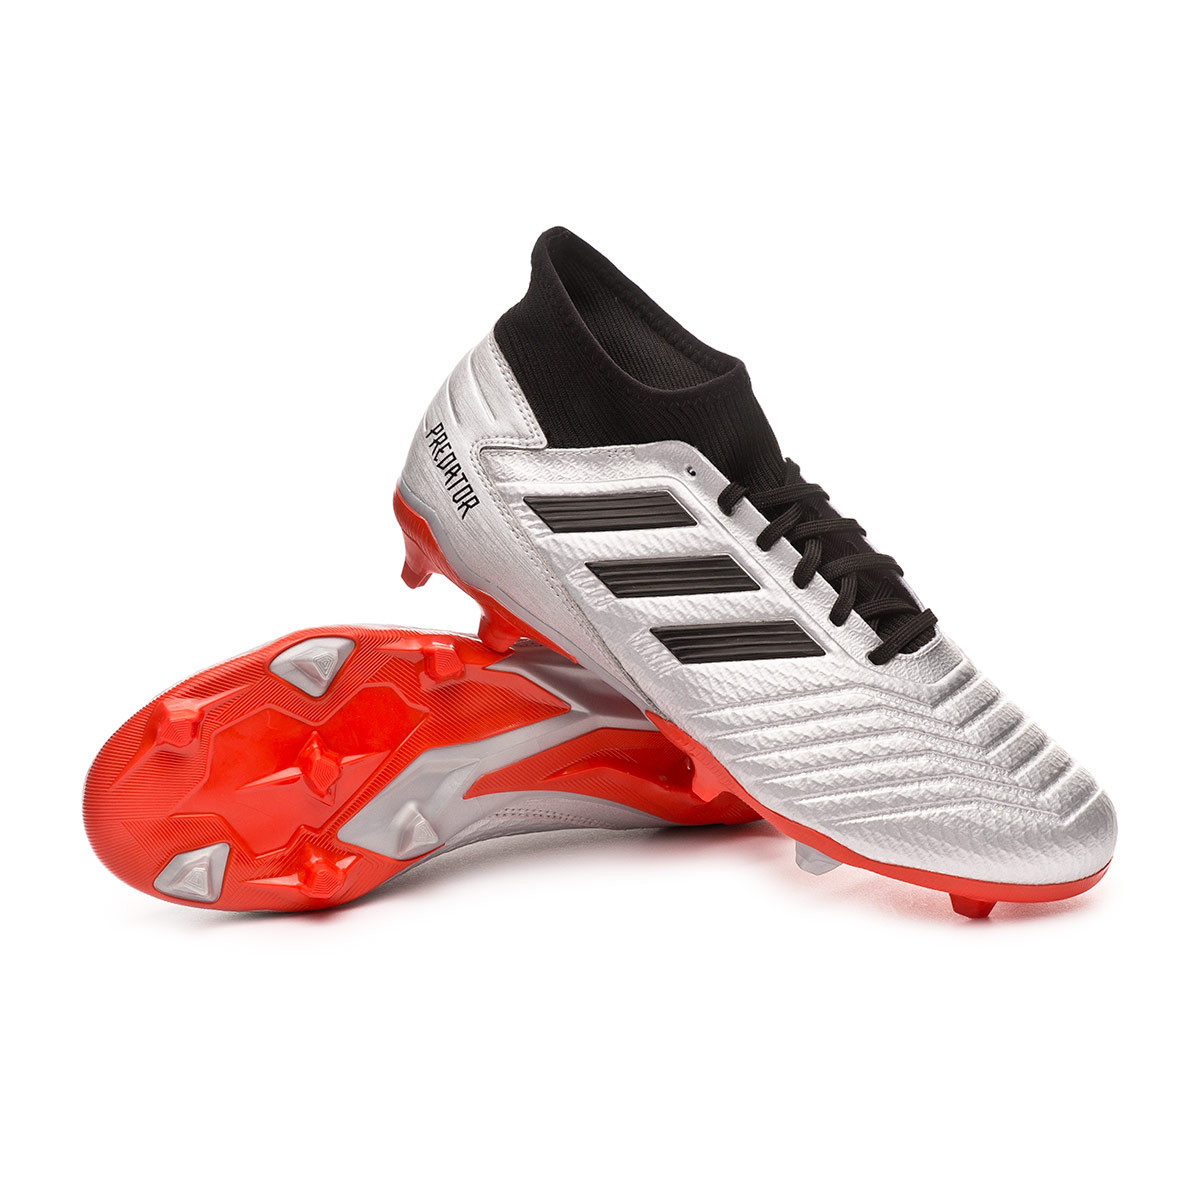 Football Boots adidas Predator 19.3 FG 